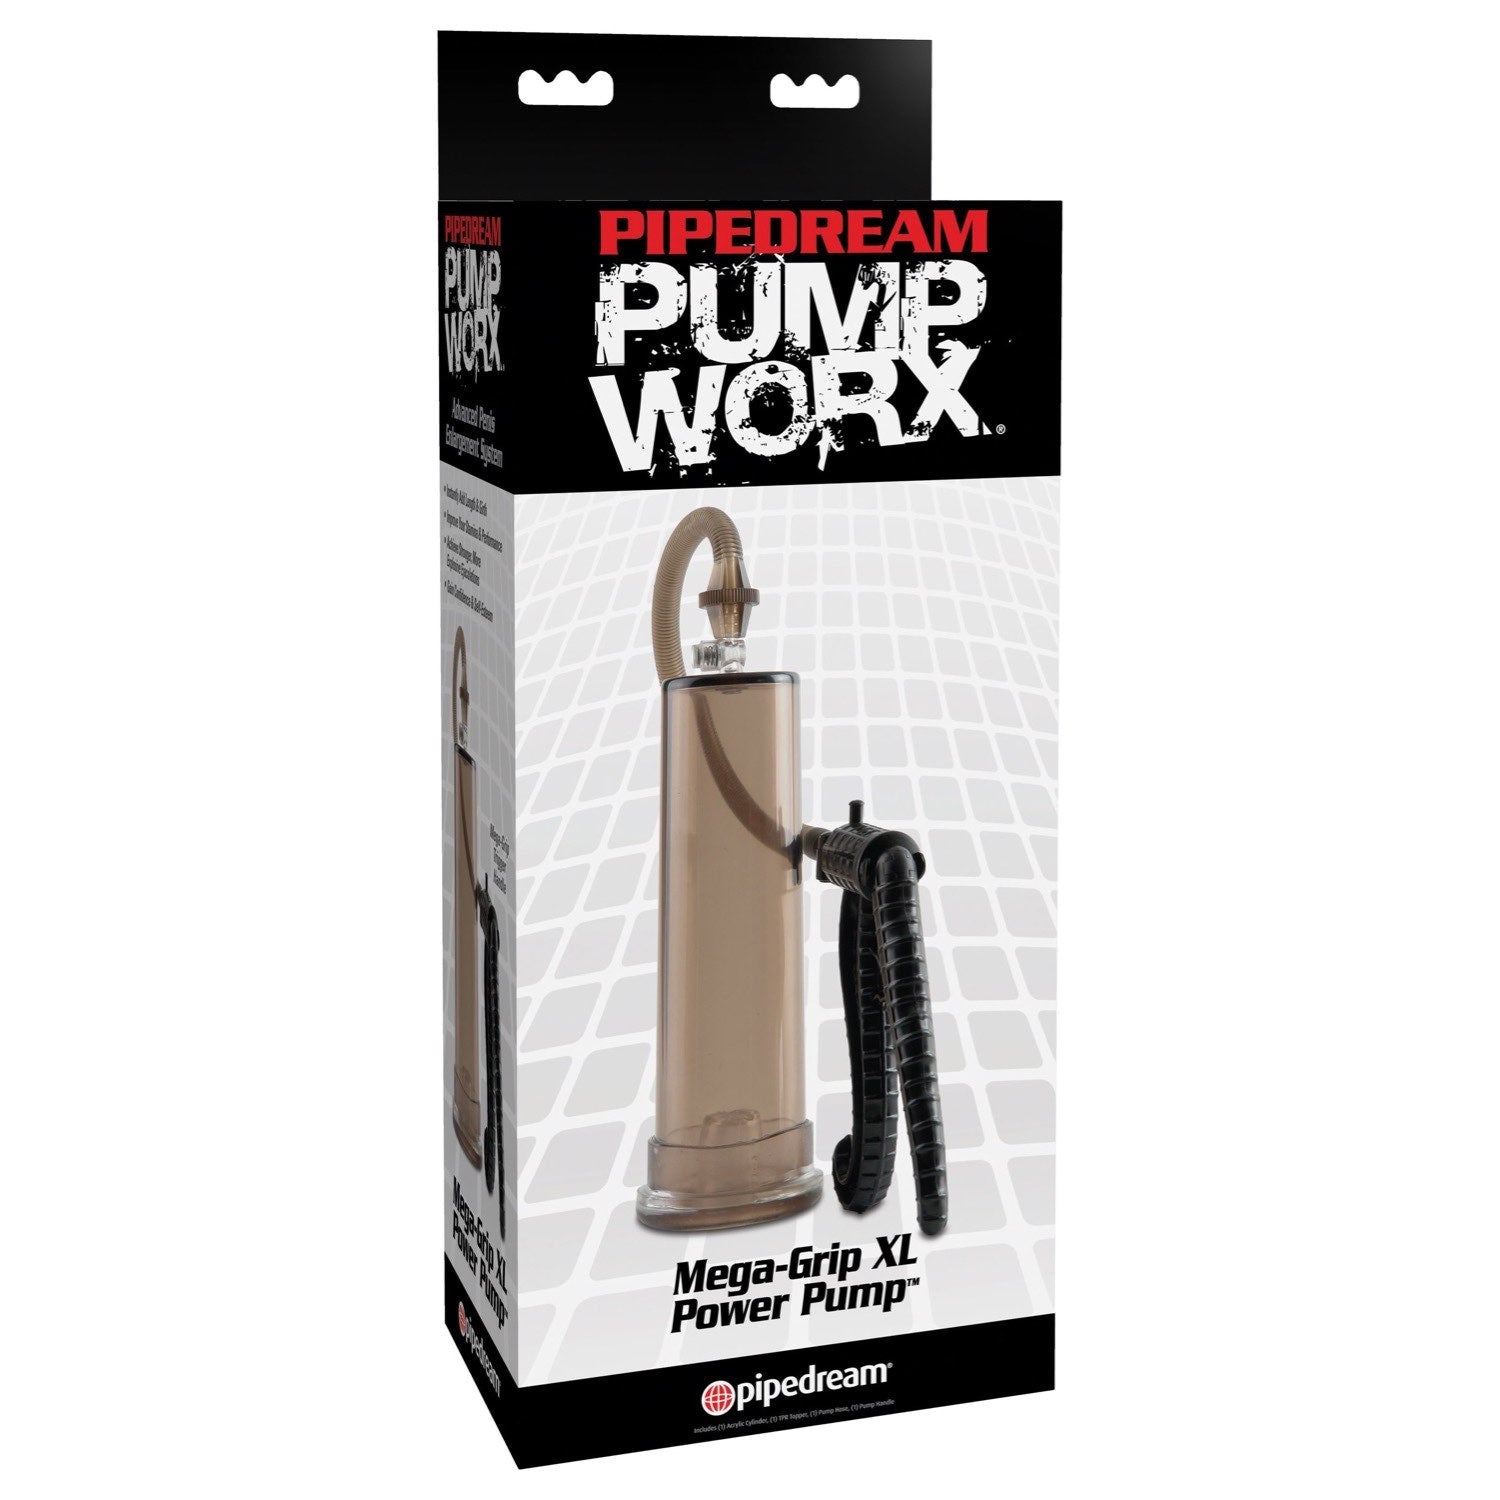 Pump Worx Mega-Grip XL Power Pump - Smoke Penis Pump by Pipedream